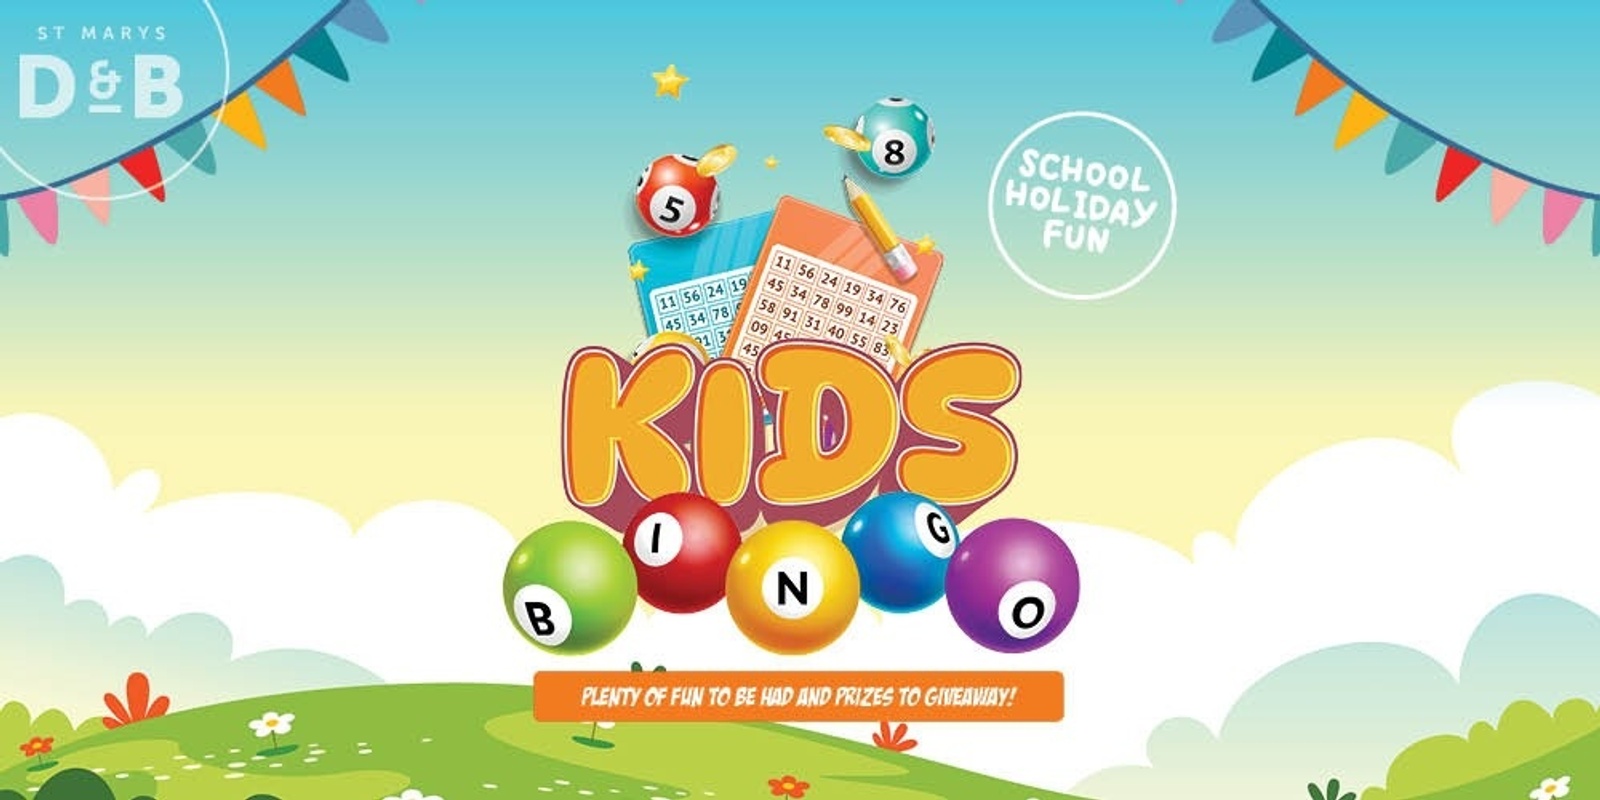 Banner image for SCHOOL HOLIDAY FUN - KIDS BINGO